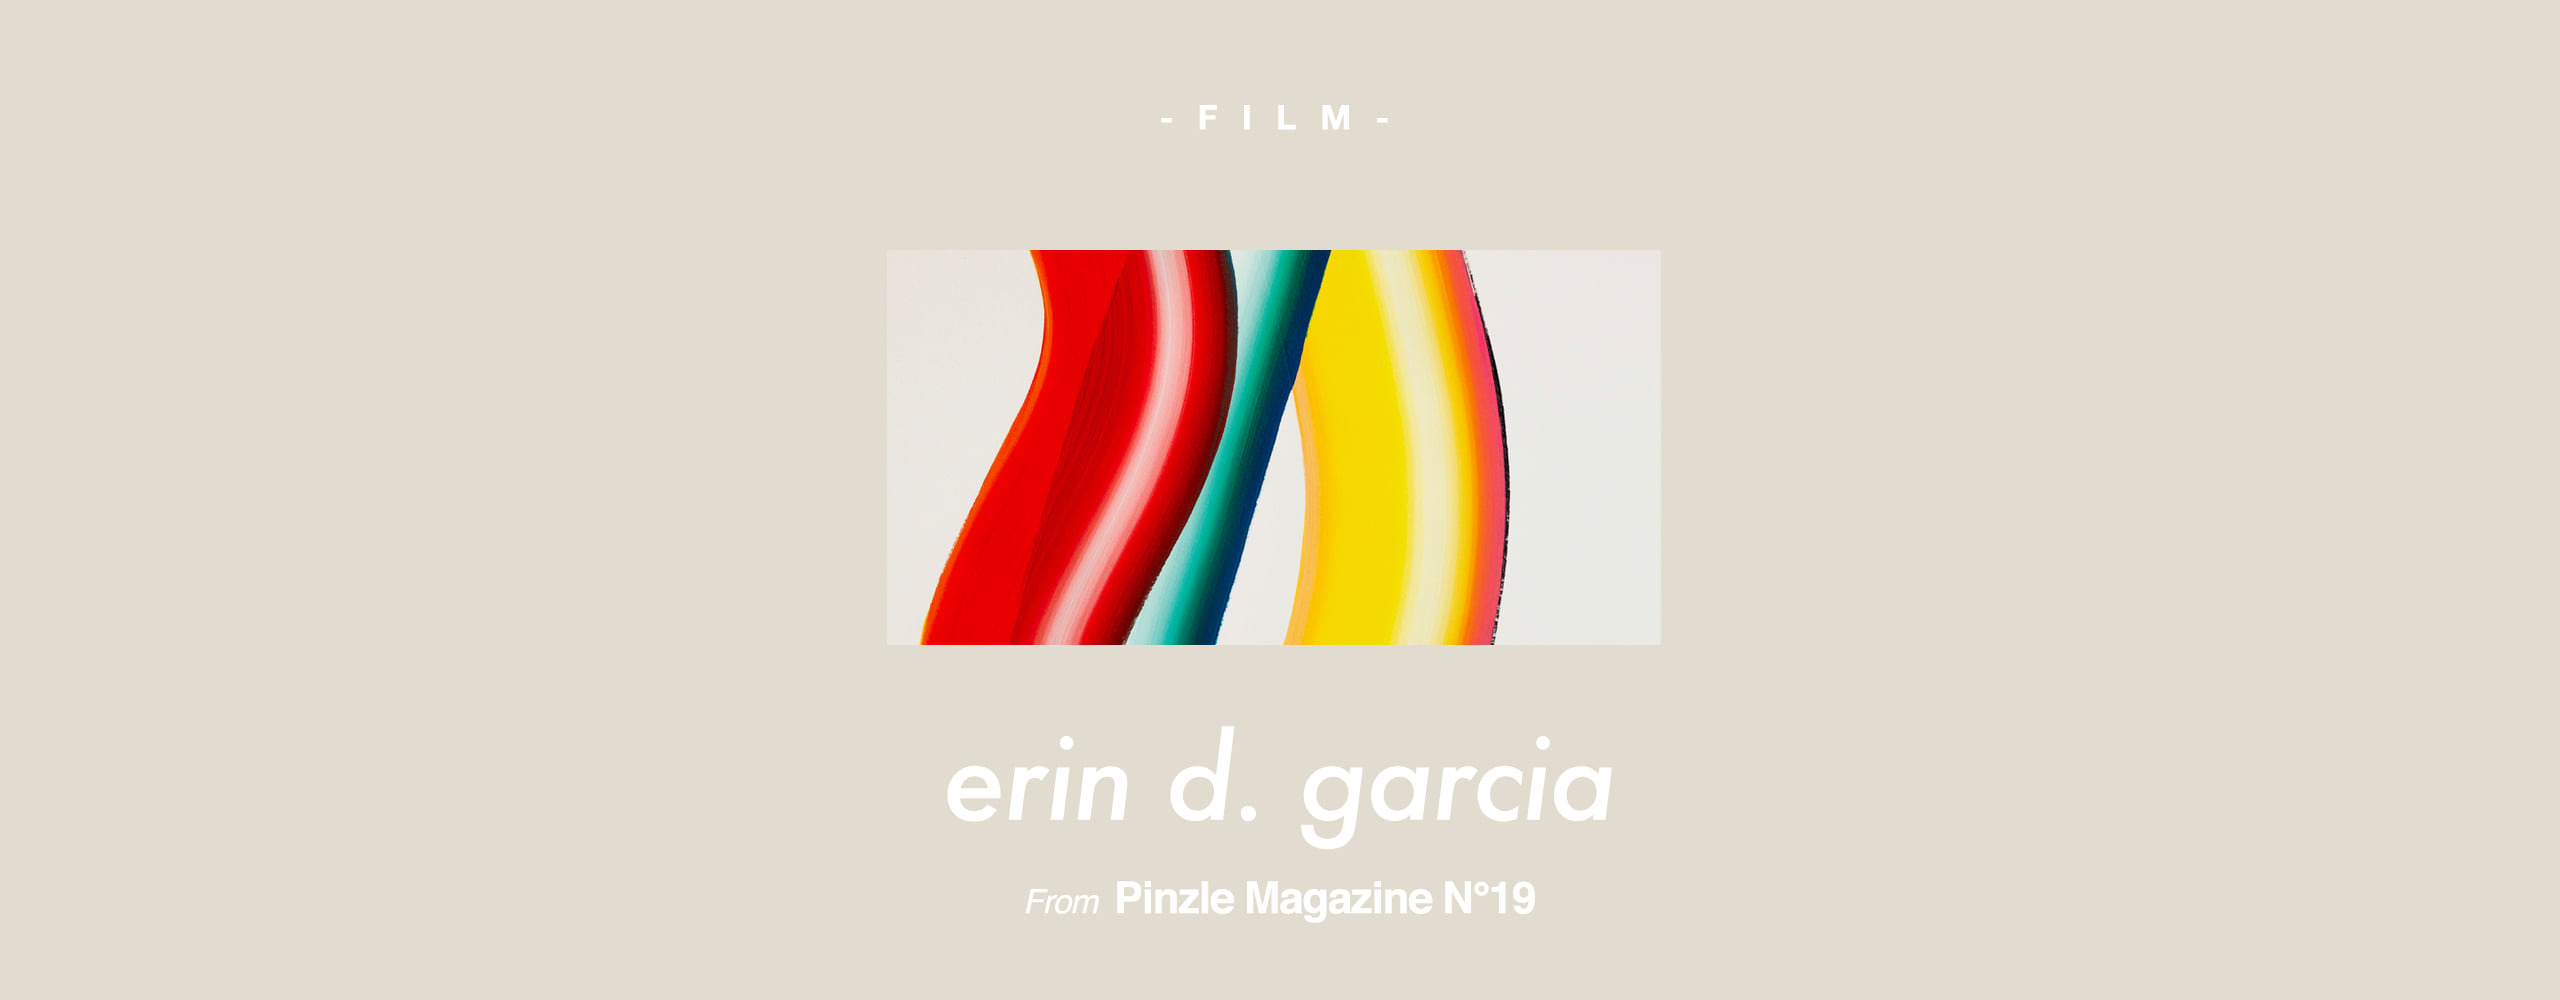 [FILM] Erin D. Garcia